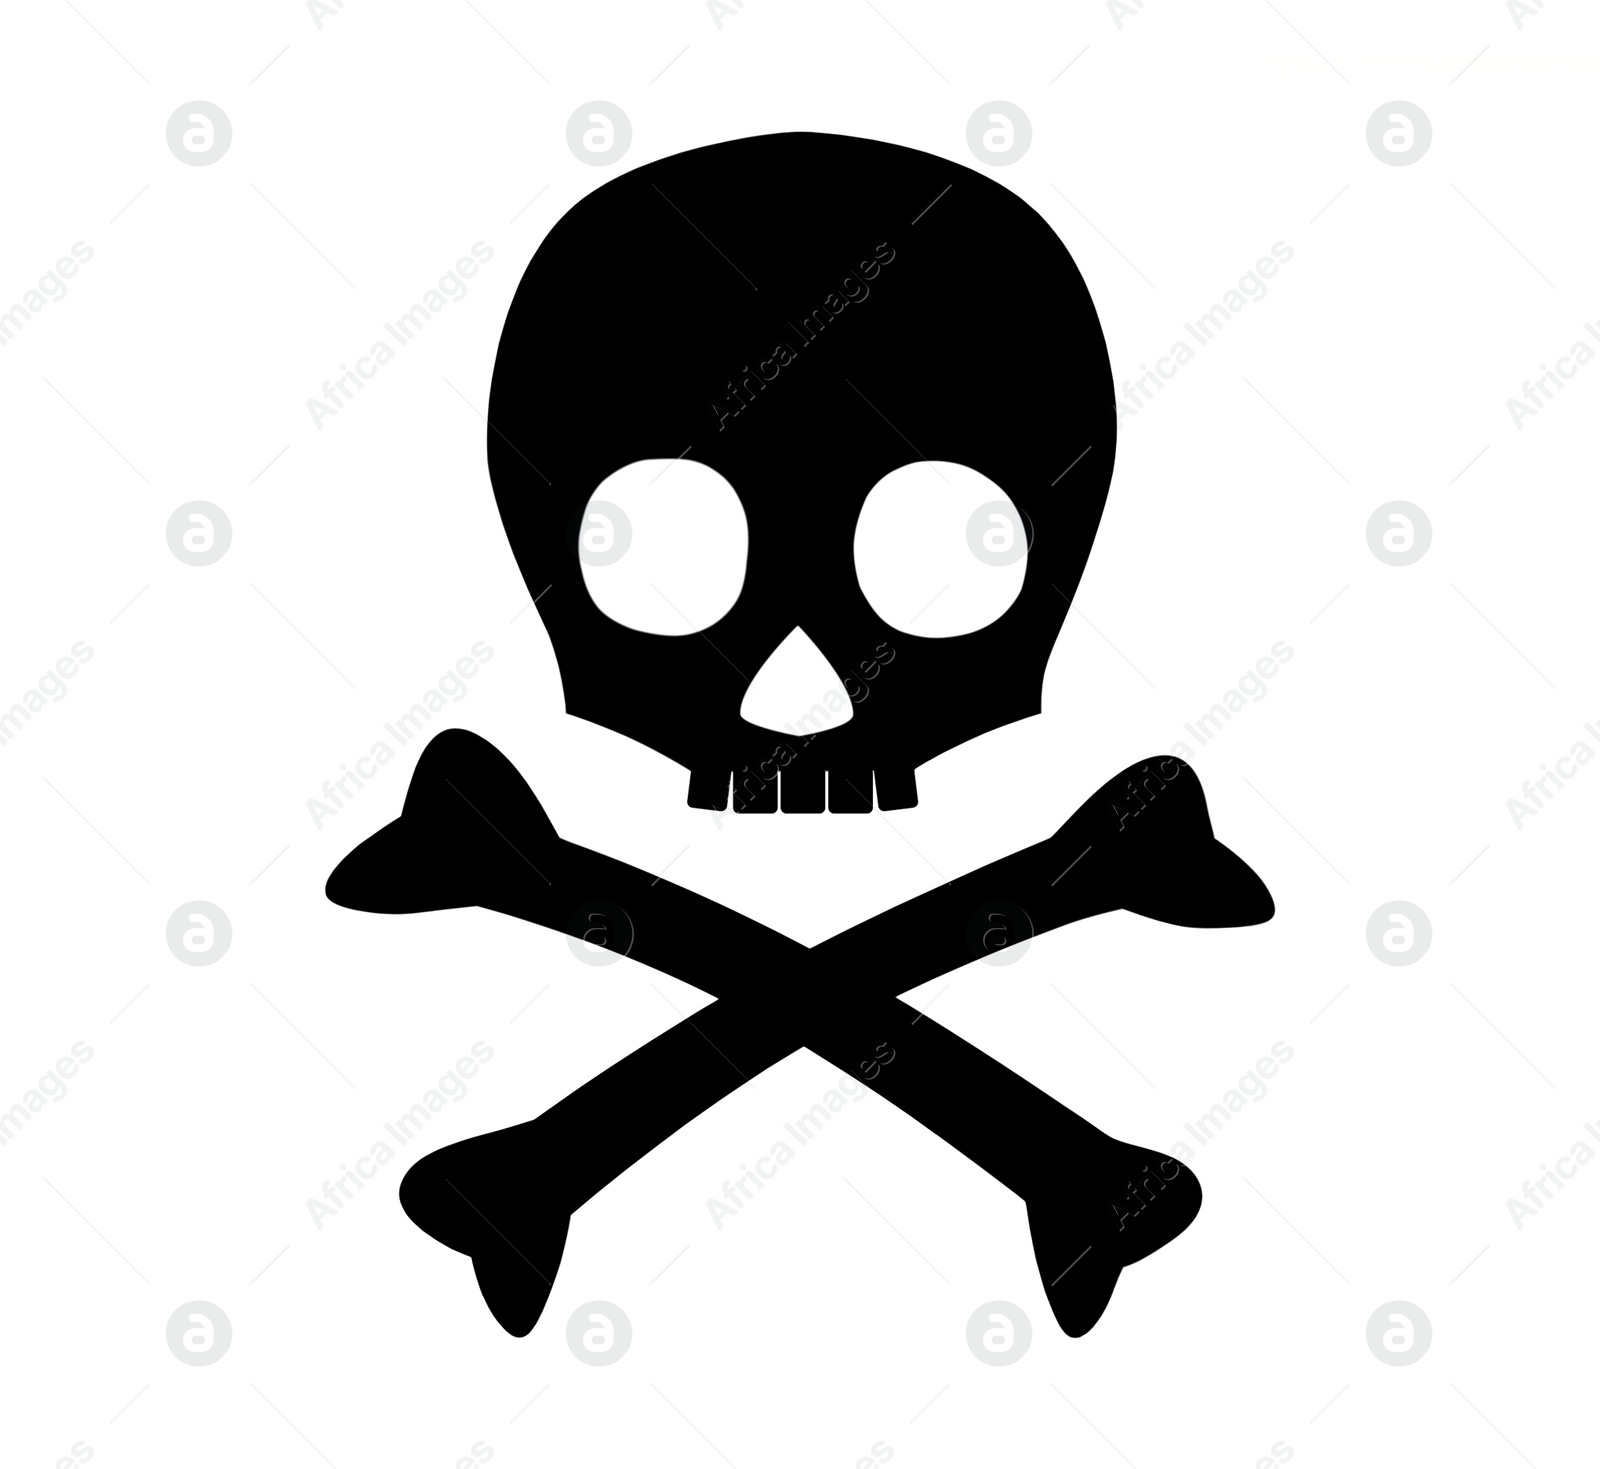 Illustration of Skull and crossbones illustration on white background as warning symbol